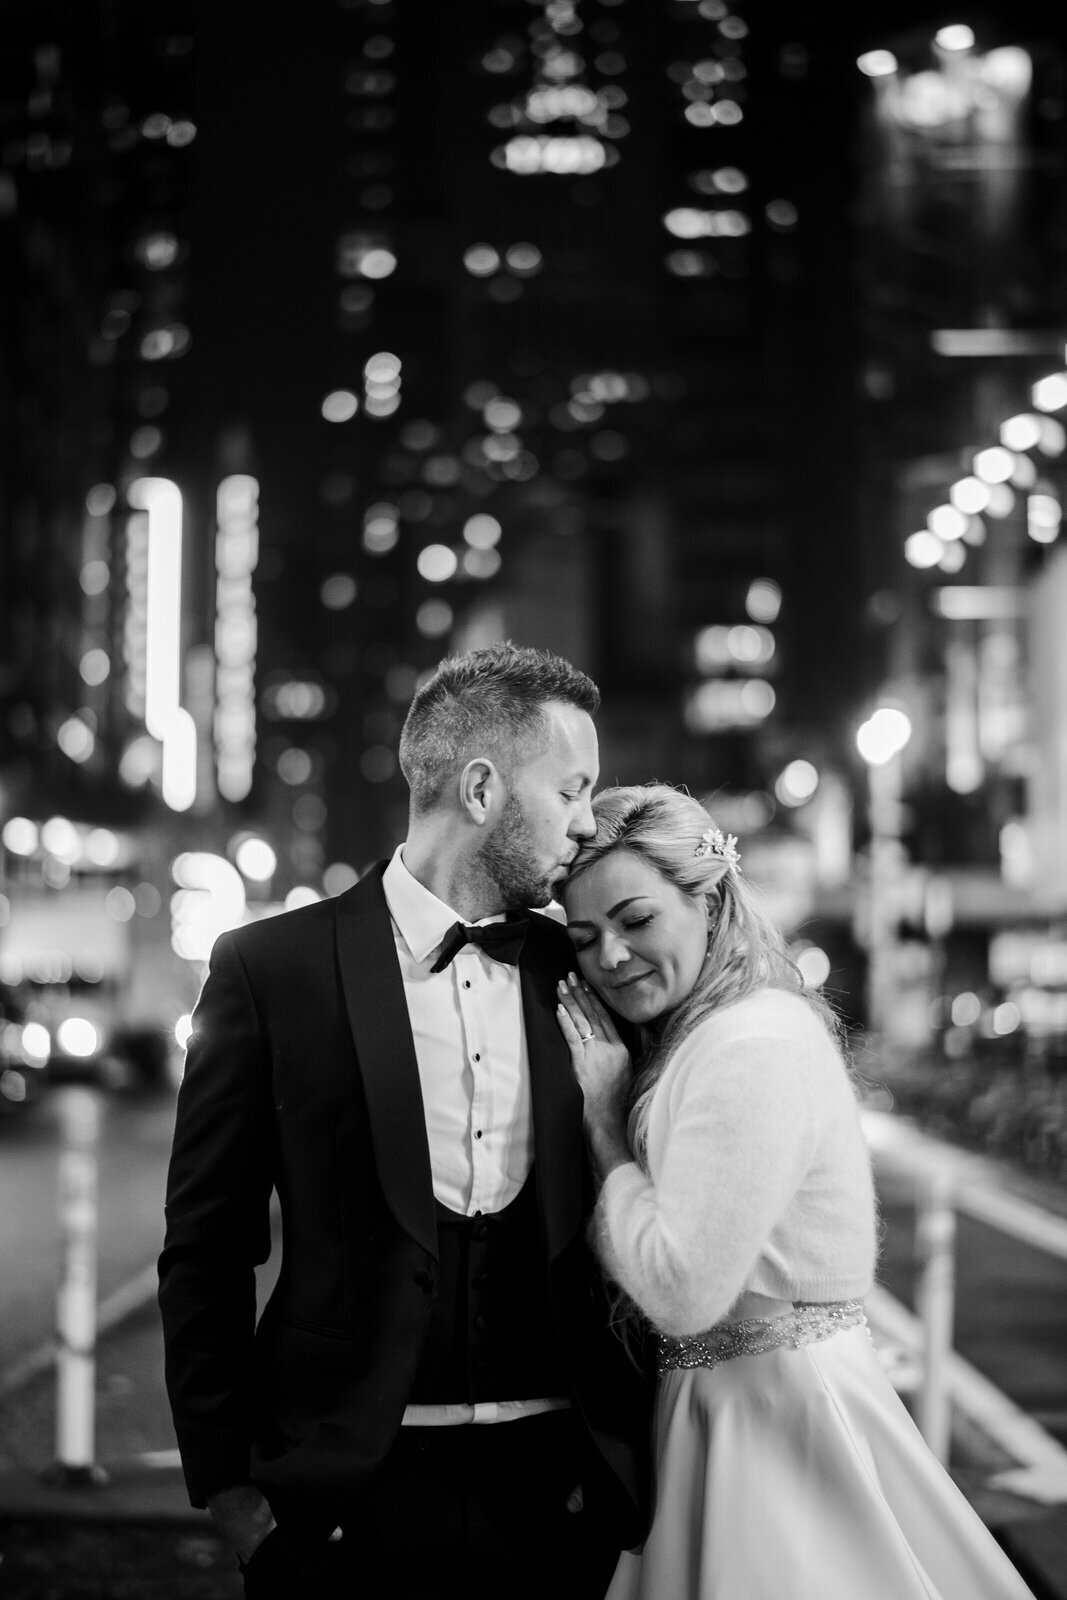 Times Square Wedding Photos Matthew Lawrence